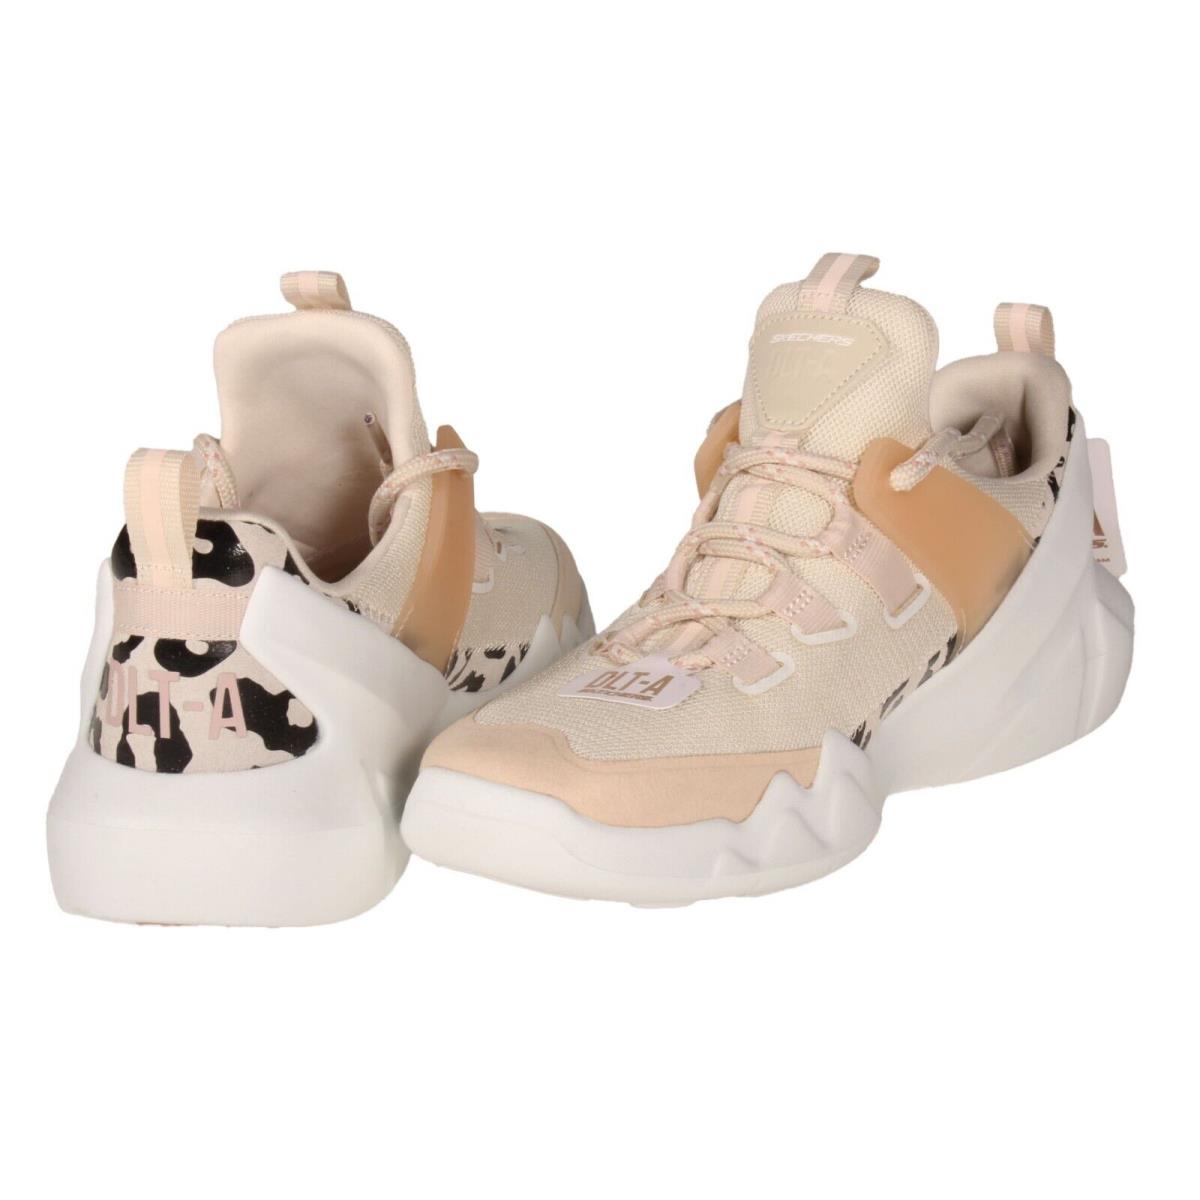 Skechers Dlt-a Land Escape Womens Sneaker Natural / Light Pink US Size 8